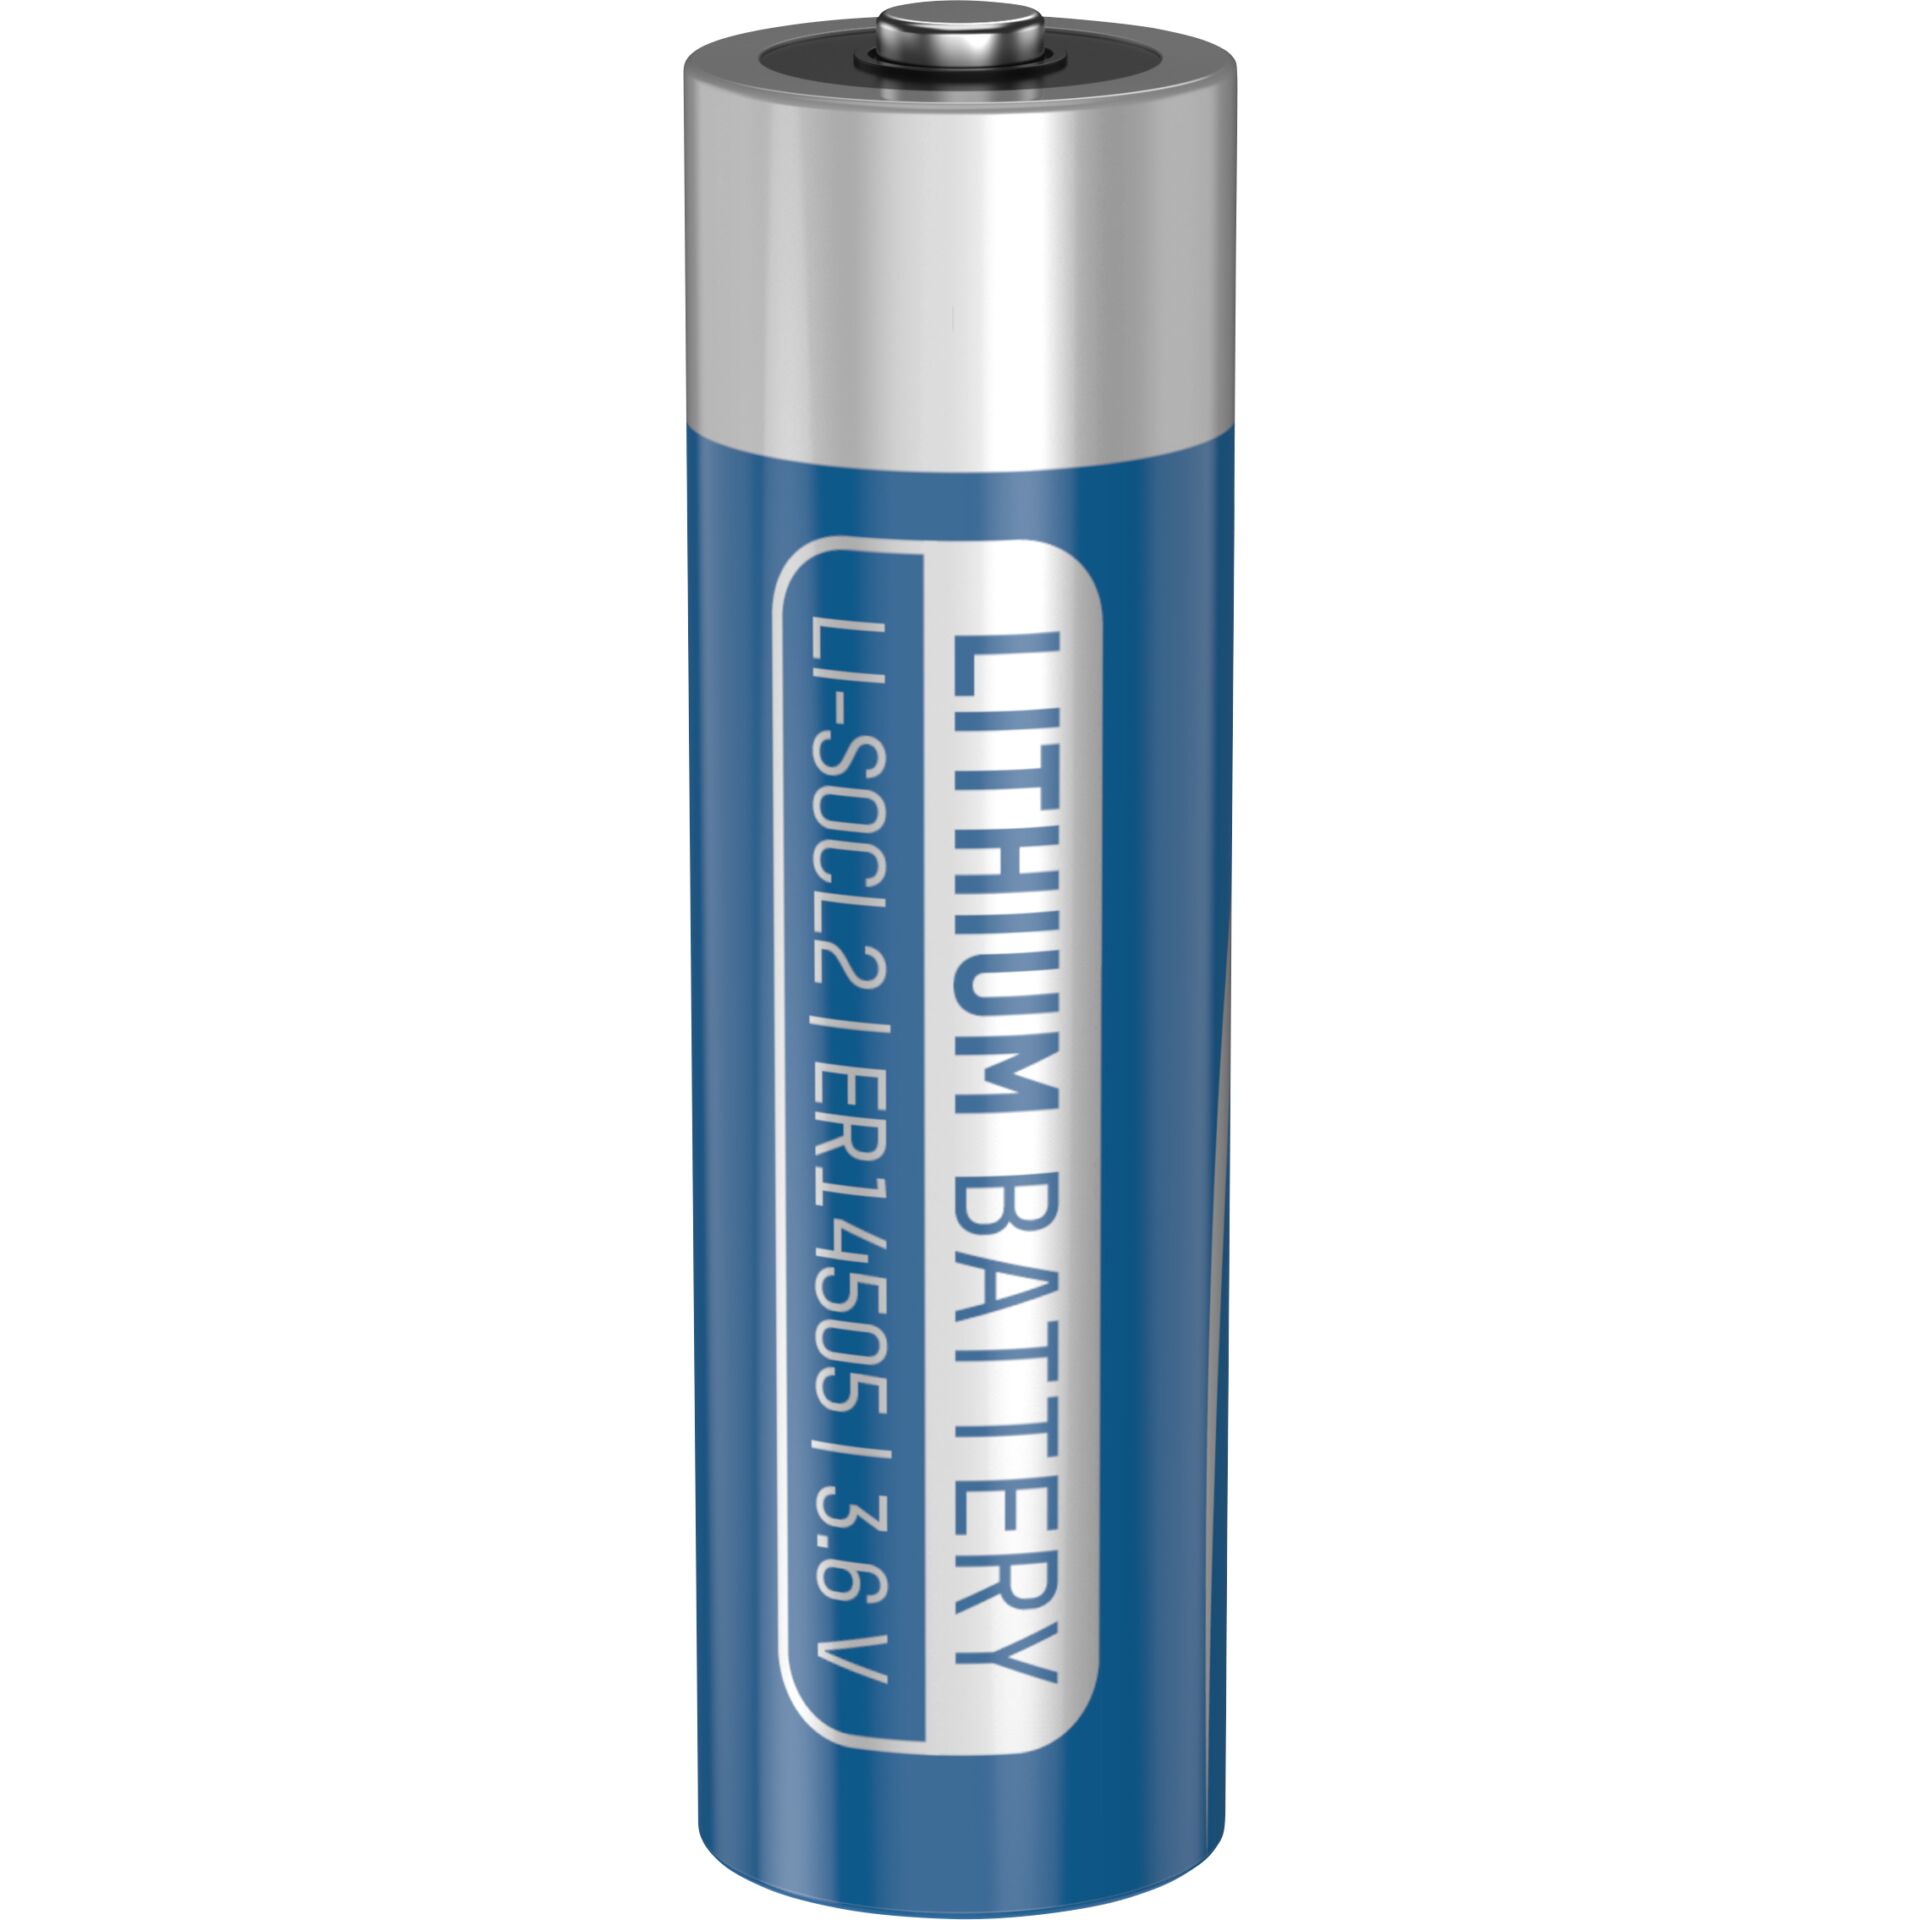 Ansmann Alkaline Batterie A23, 12V (5015182) ab 0,99